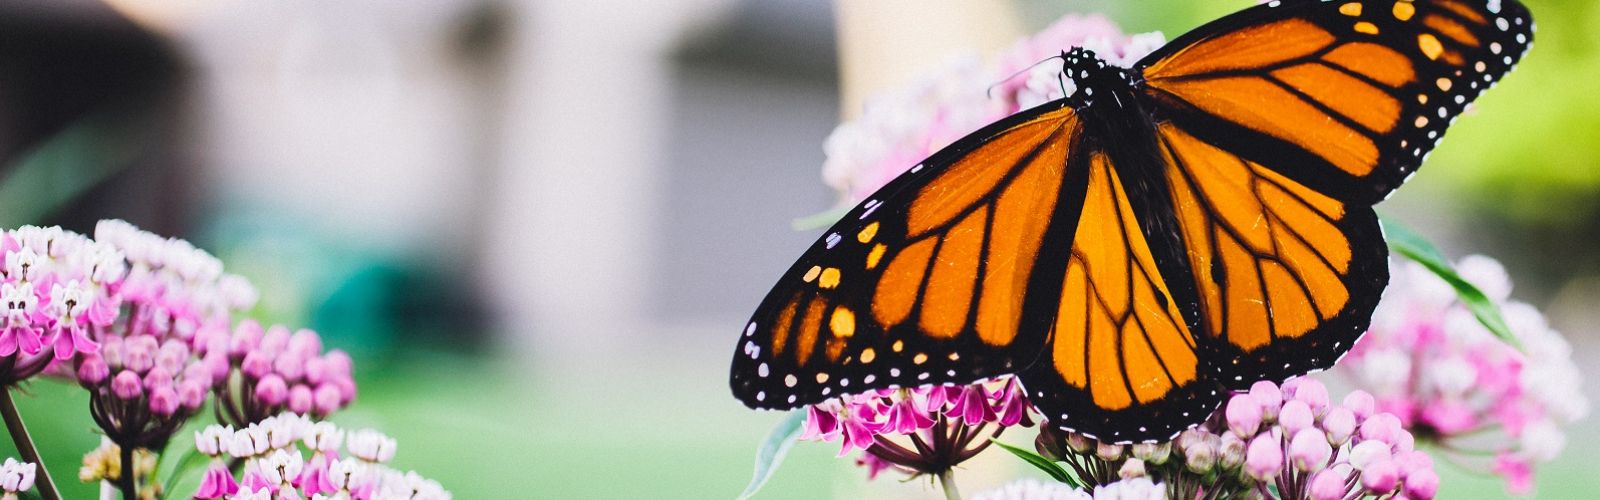 Monarch butterfly on native milkweed